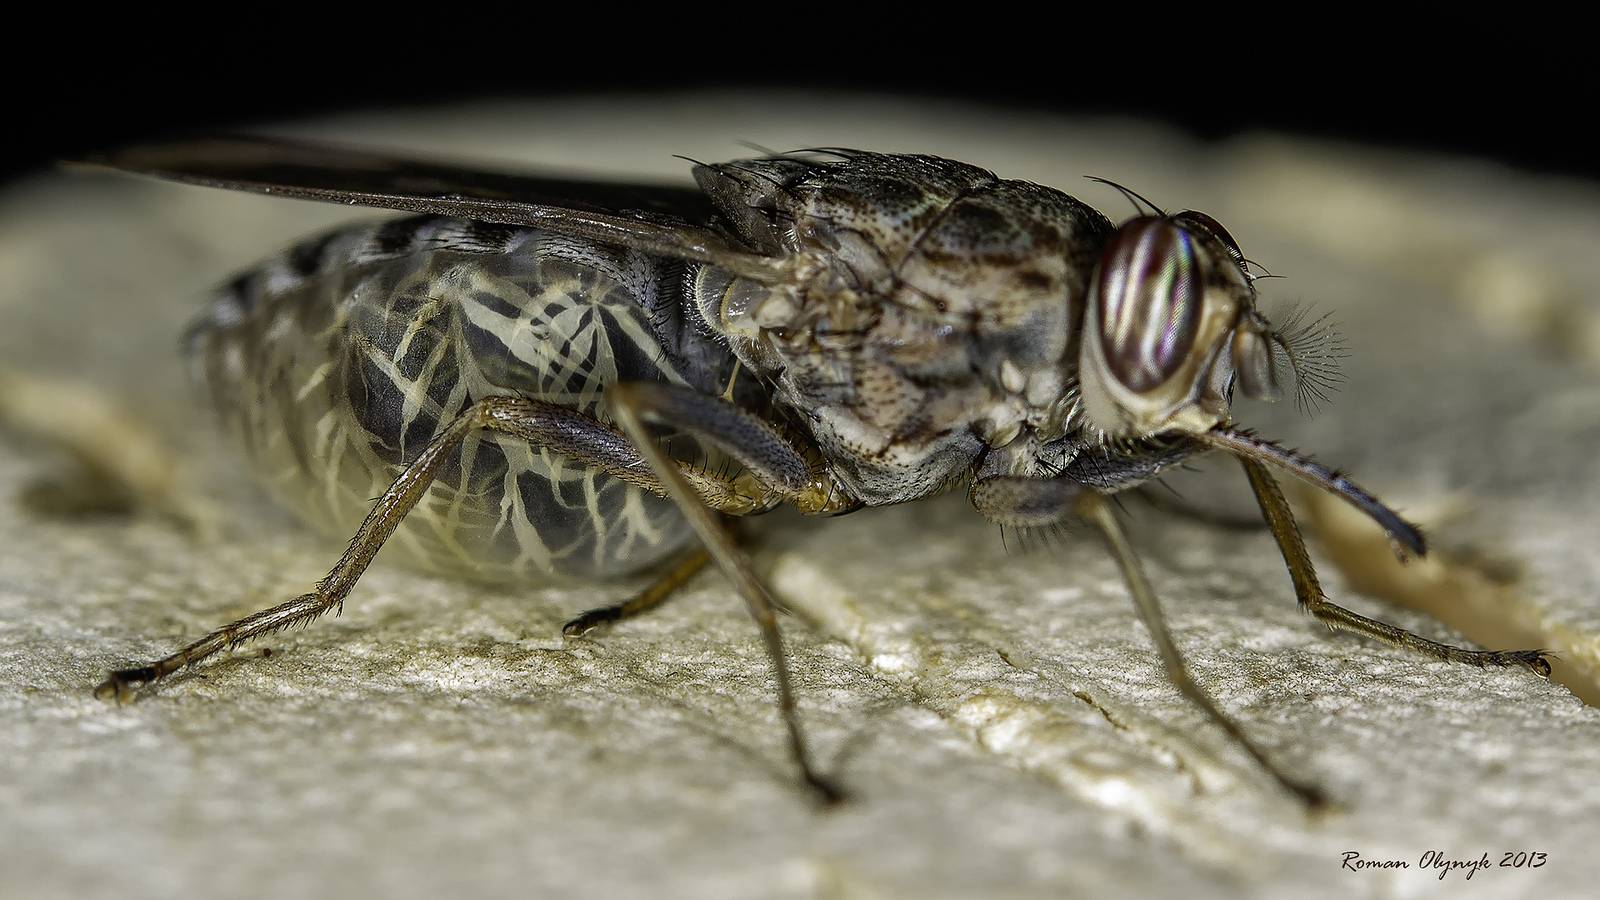 Муха цеце насекомое. образ жизни и среда обитания мухи цеце